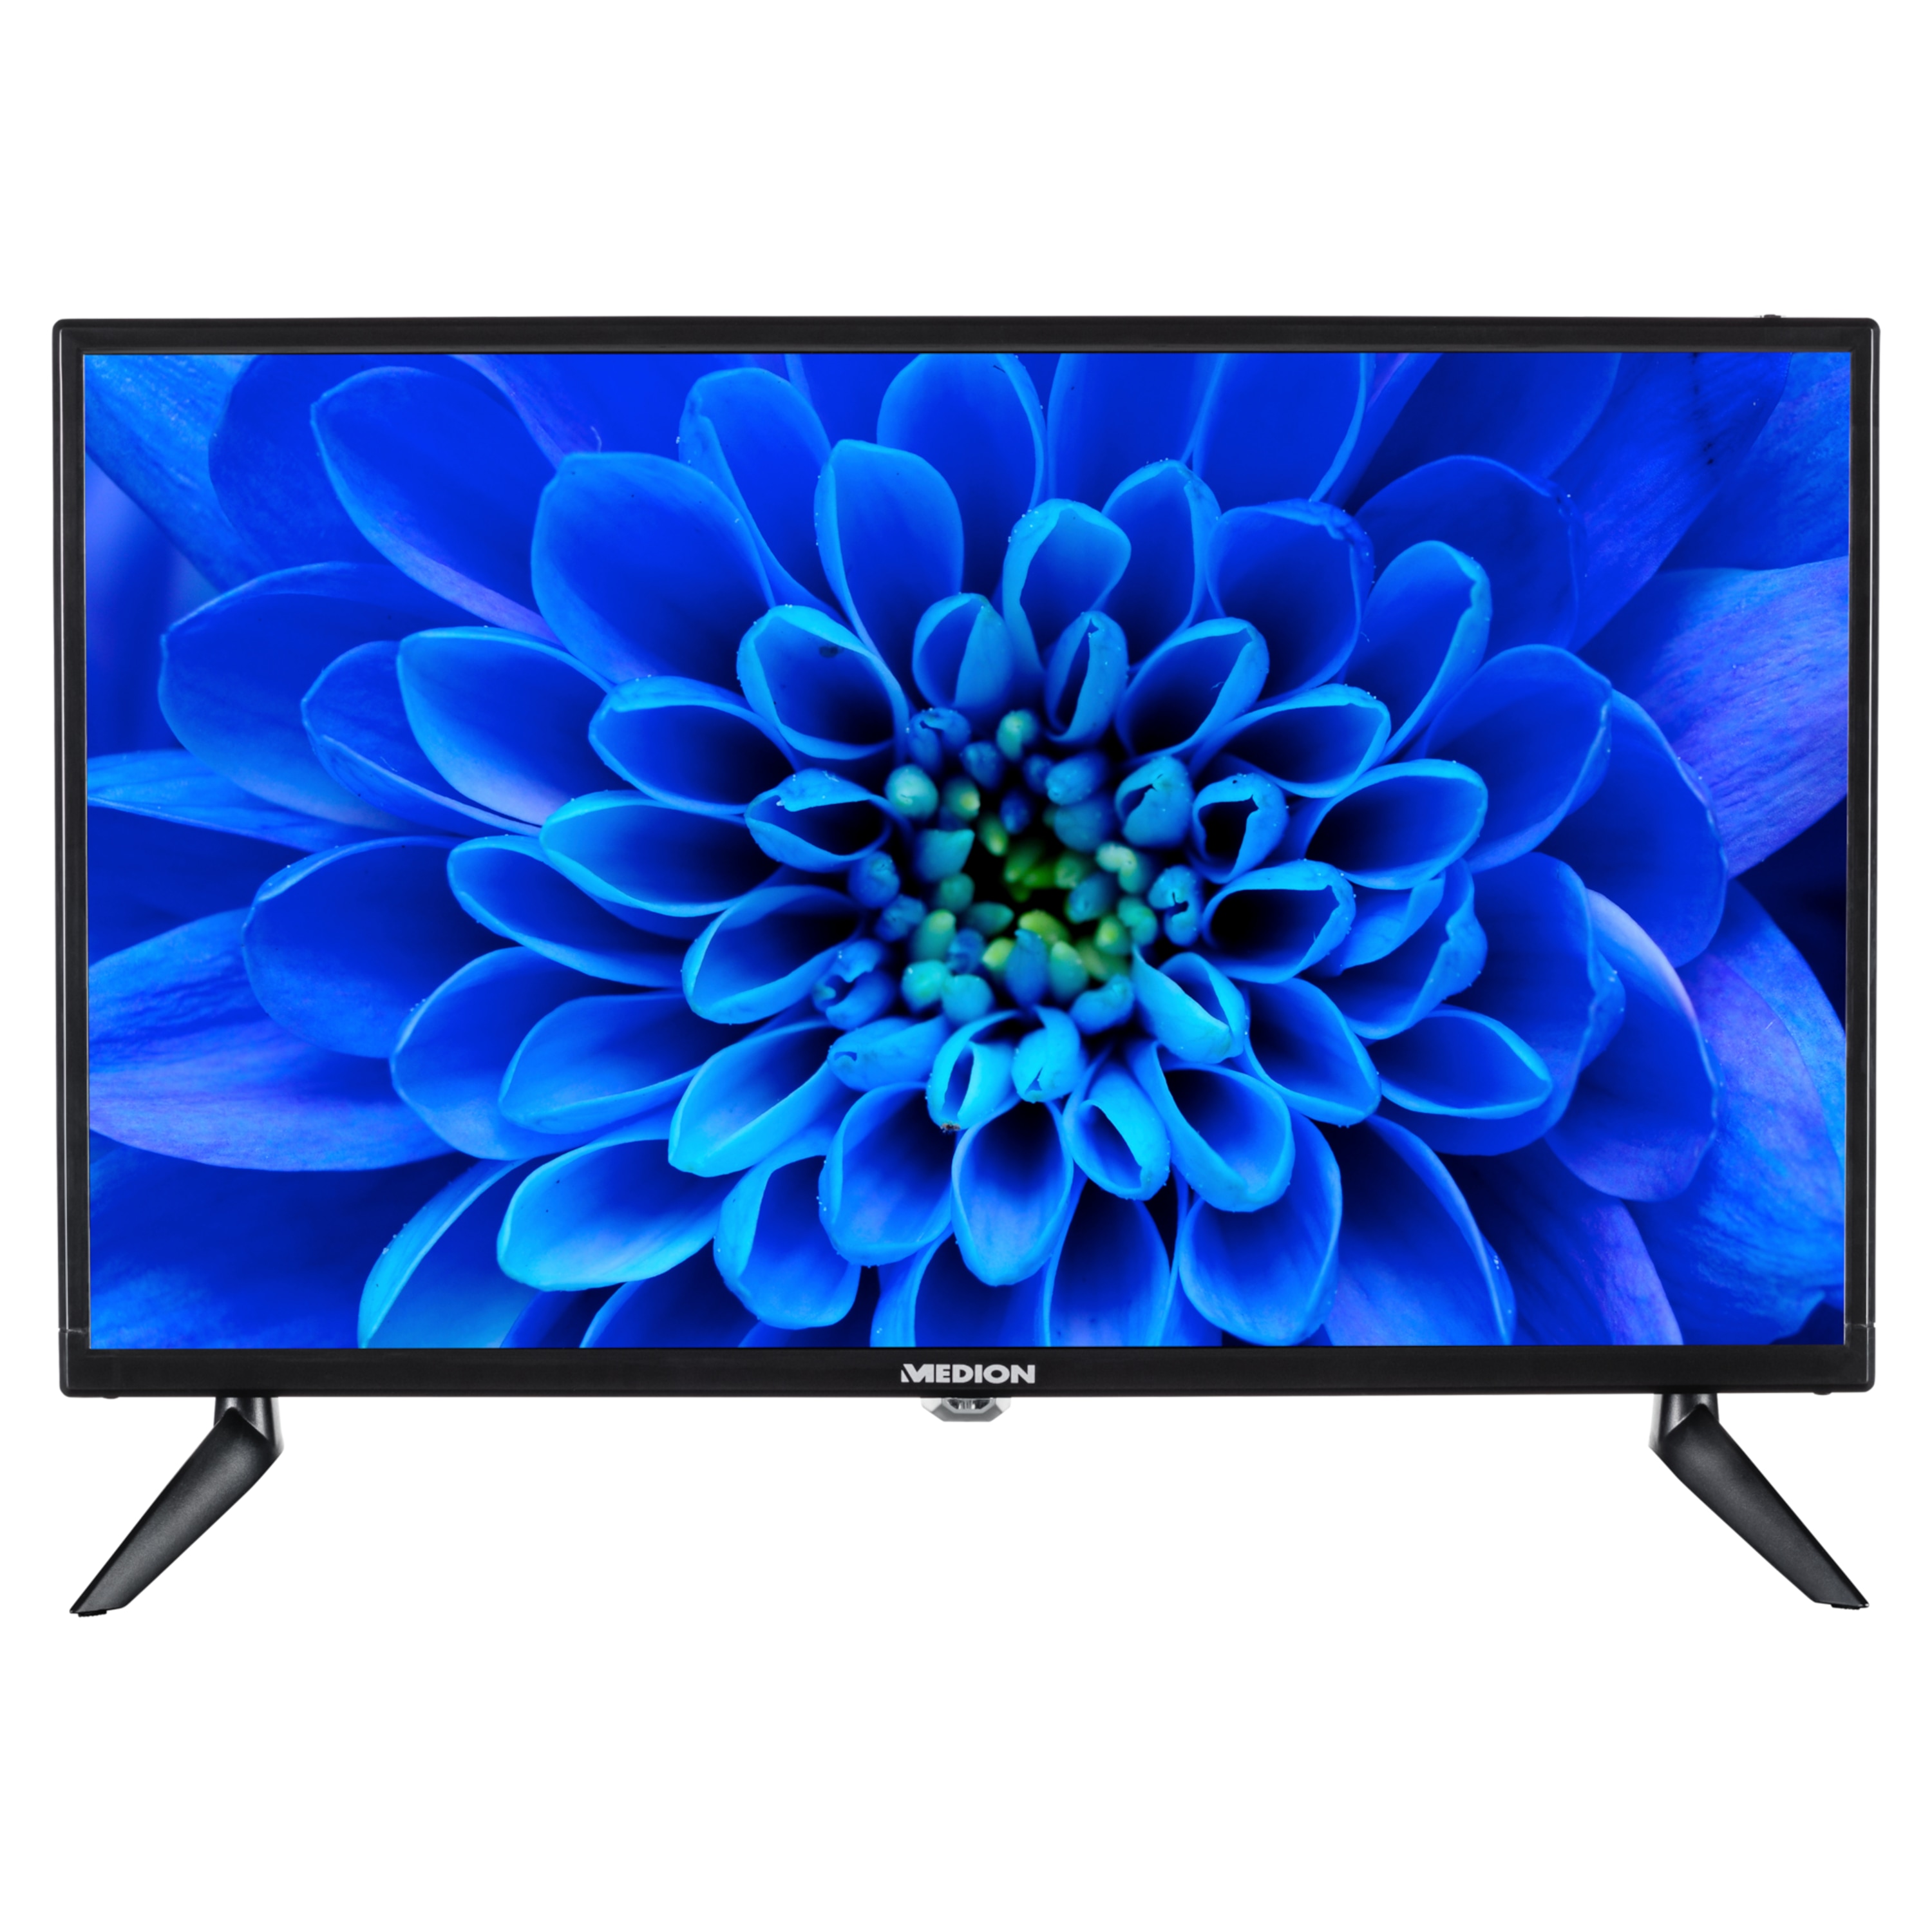 LIFE® E12414 LCD-TV | 59,9 cm (24 inch) Full HD Display | HD Triple Tuner | geïntegreerde Mediaplayer | Autoadapter | CI+